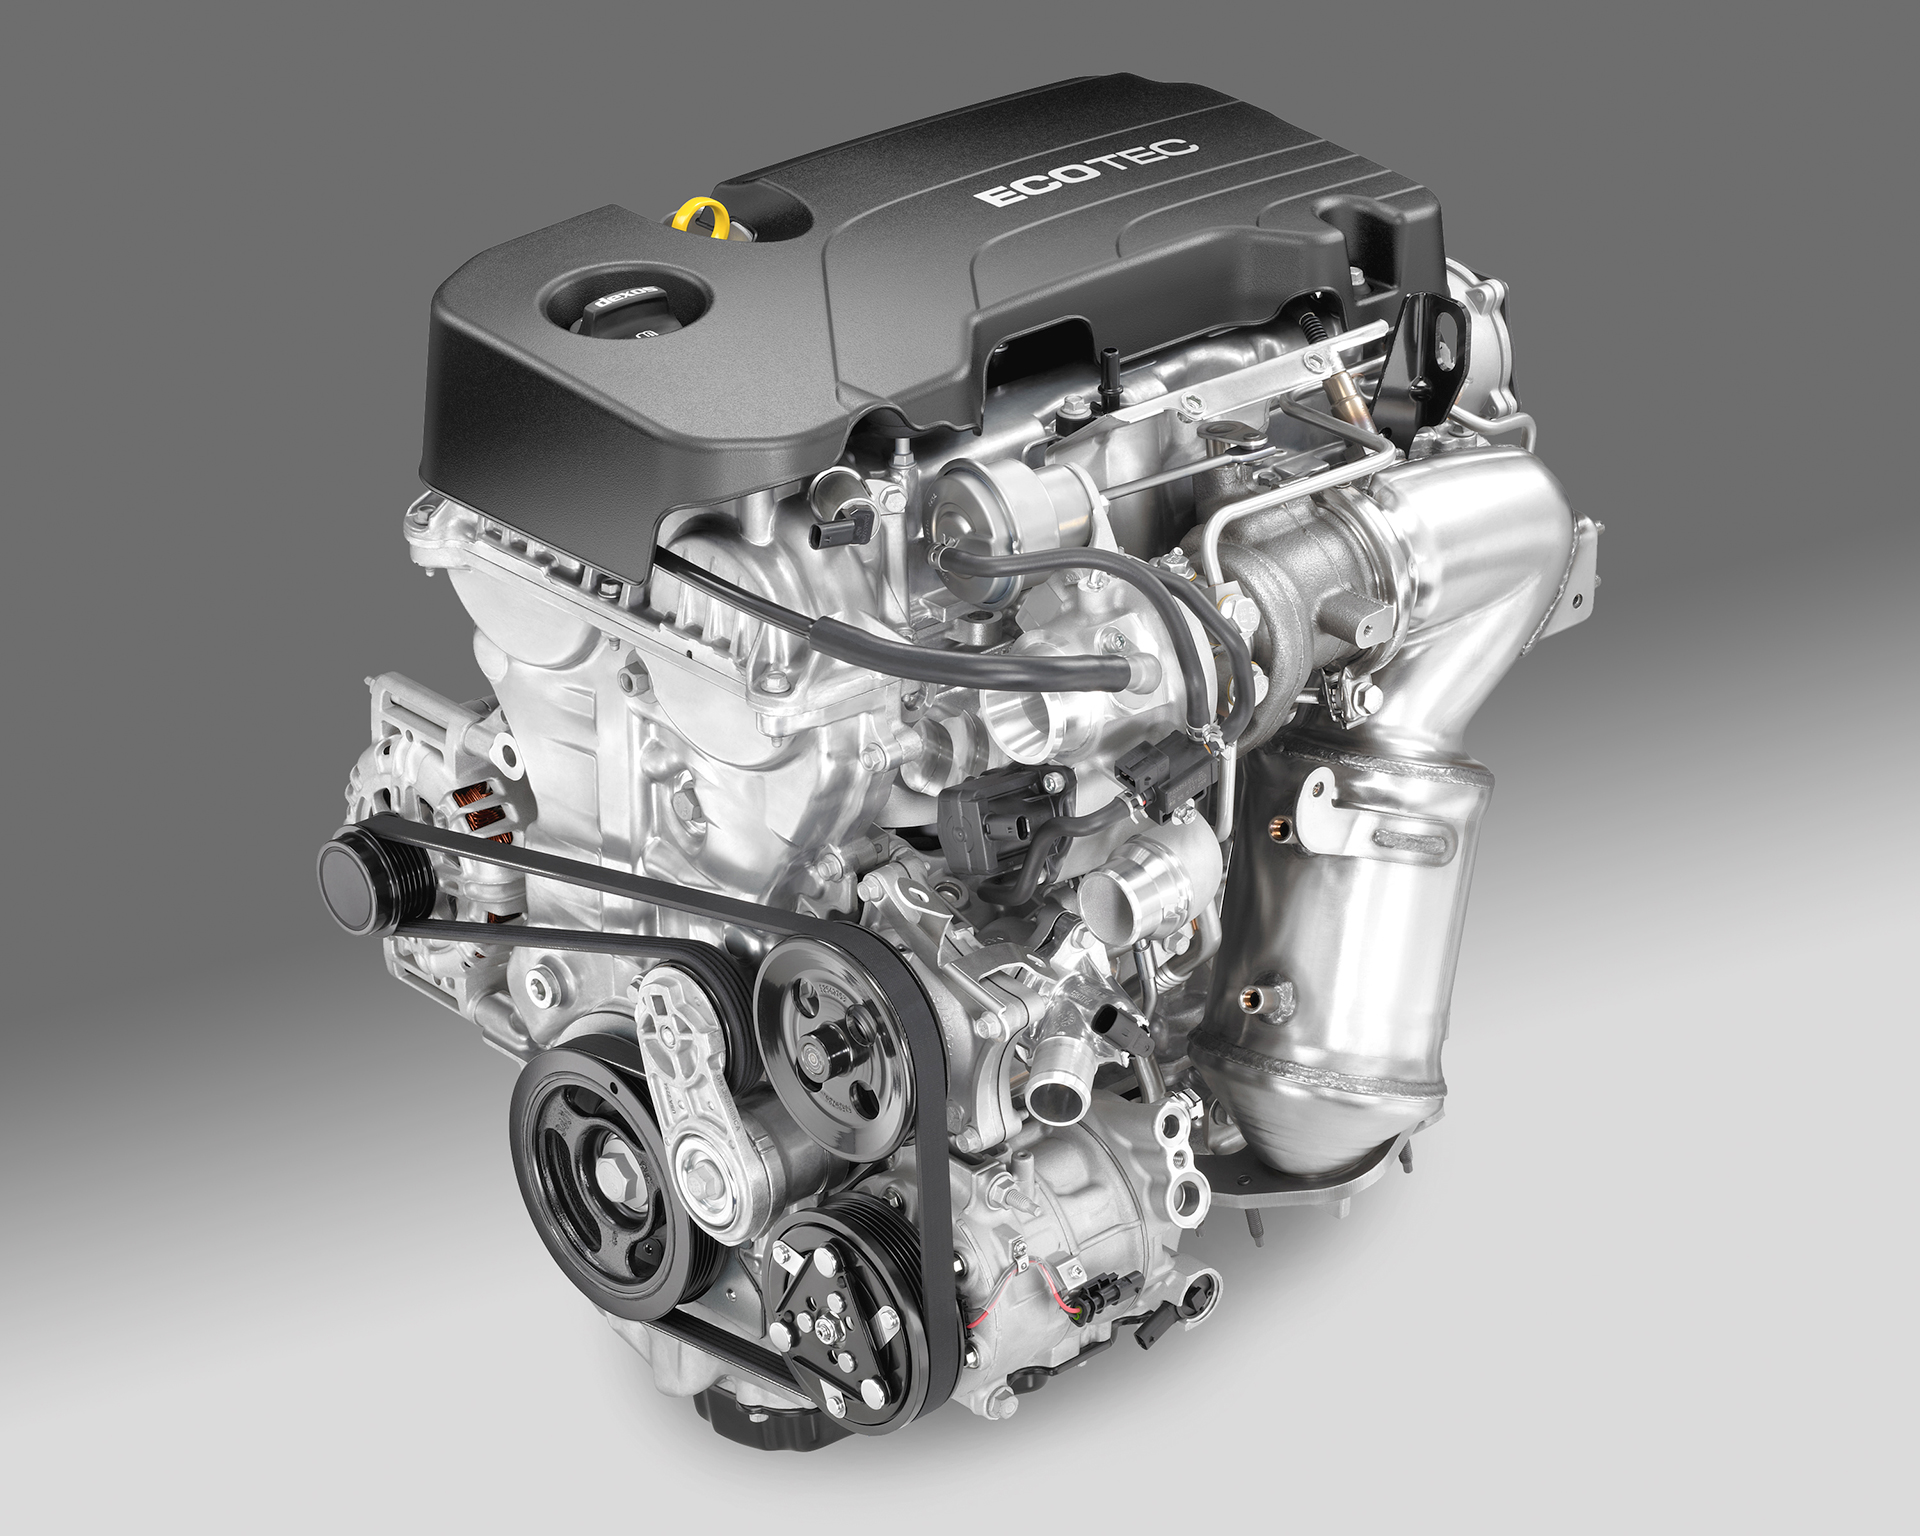 Opel moteur 1.4 ECOTEC Direct Injection Turbo - Image - GM Company.